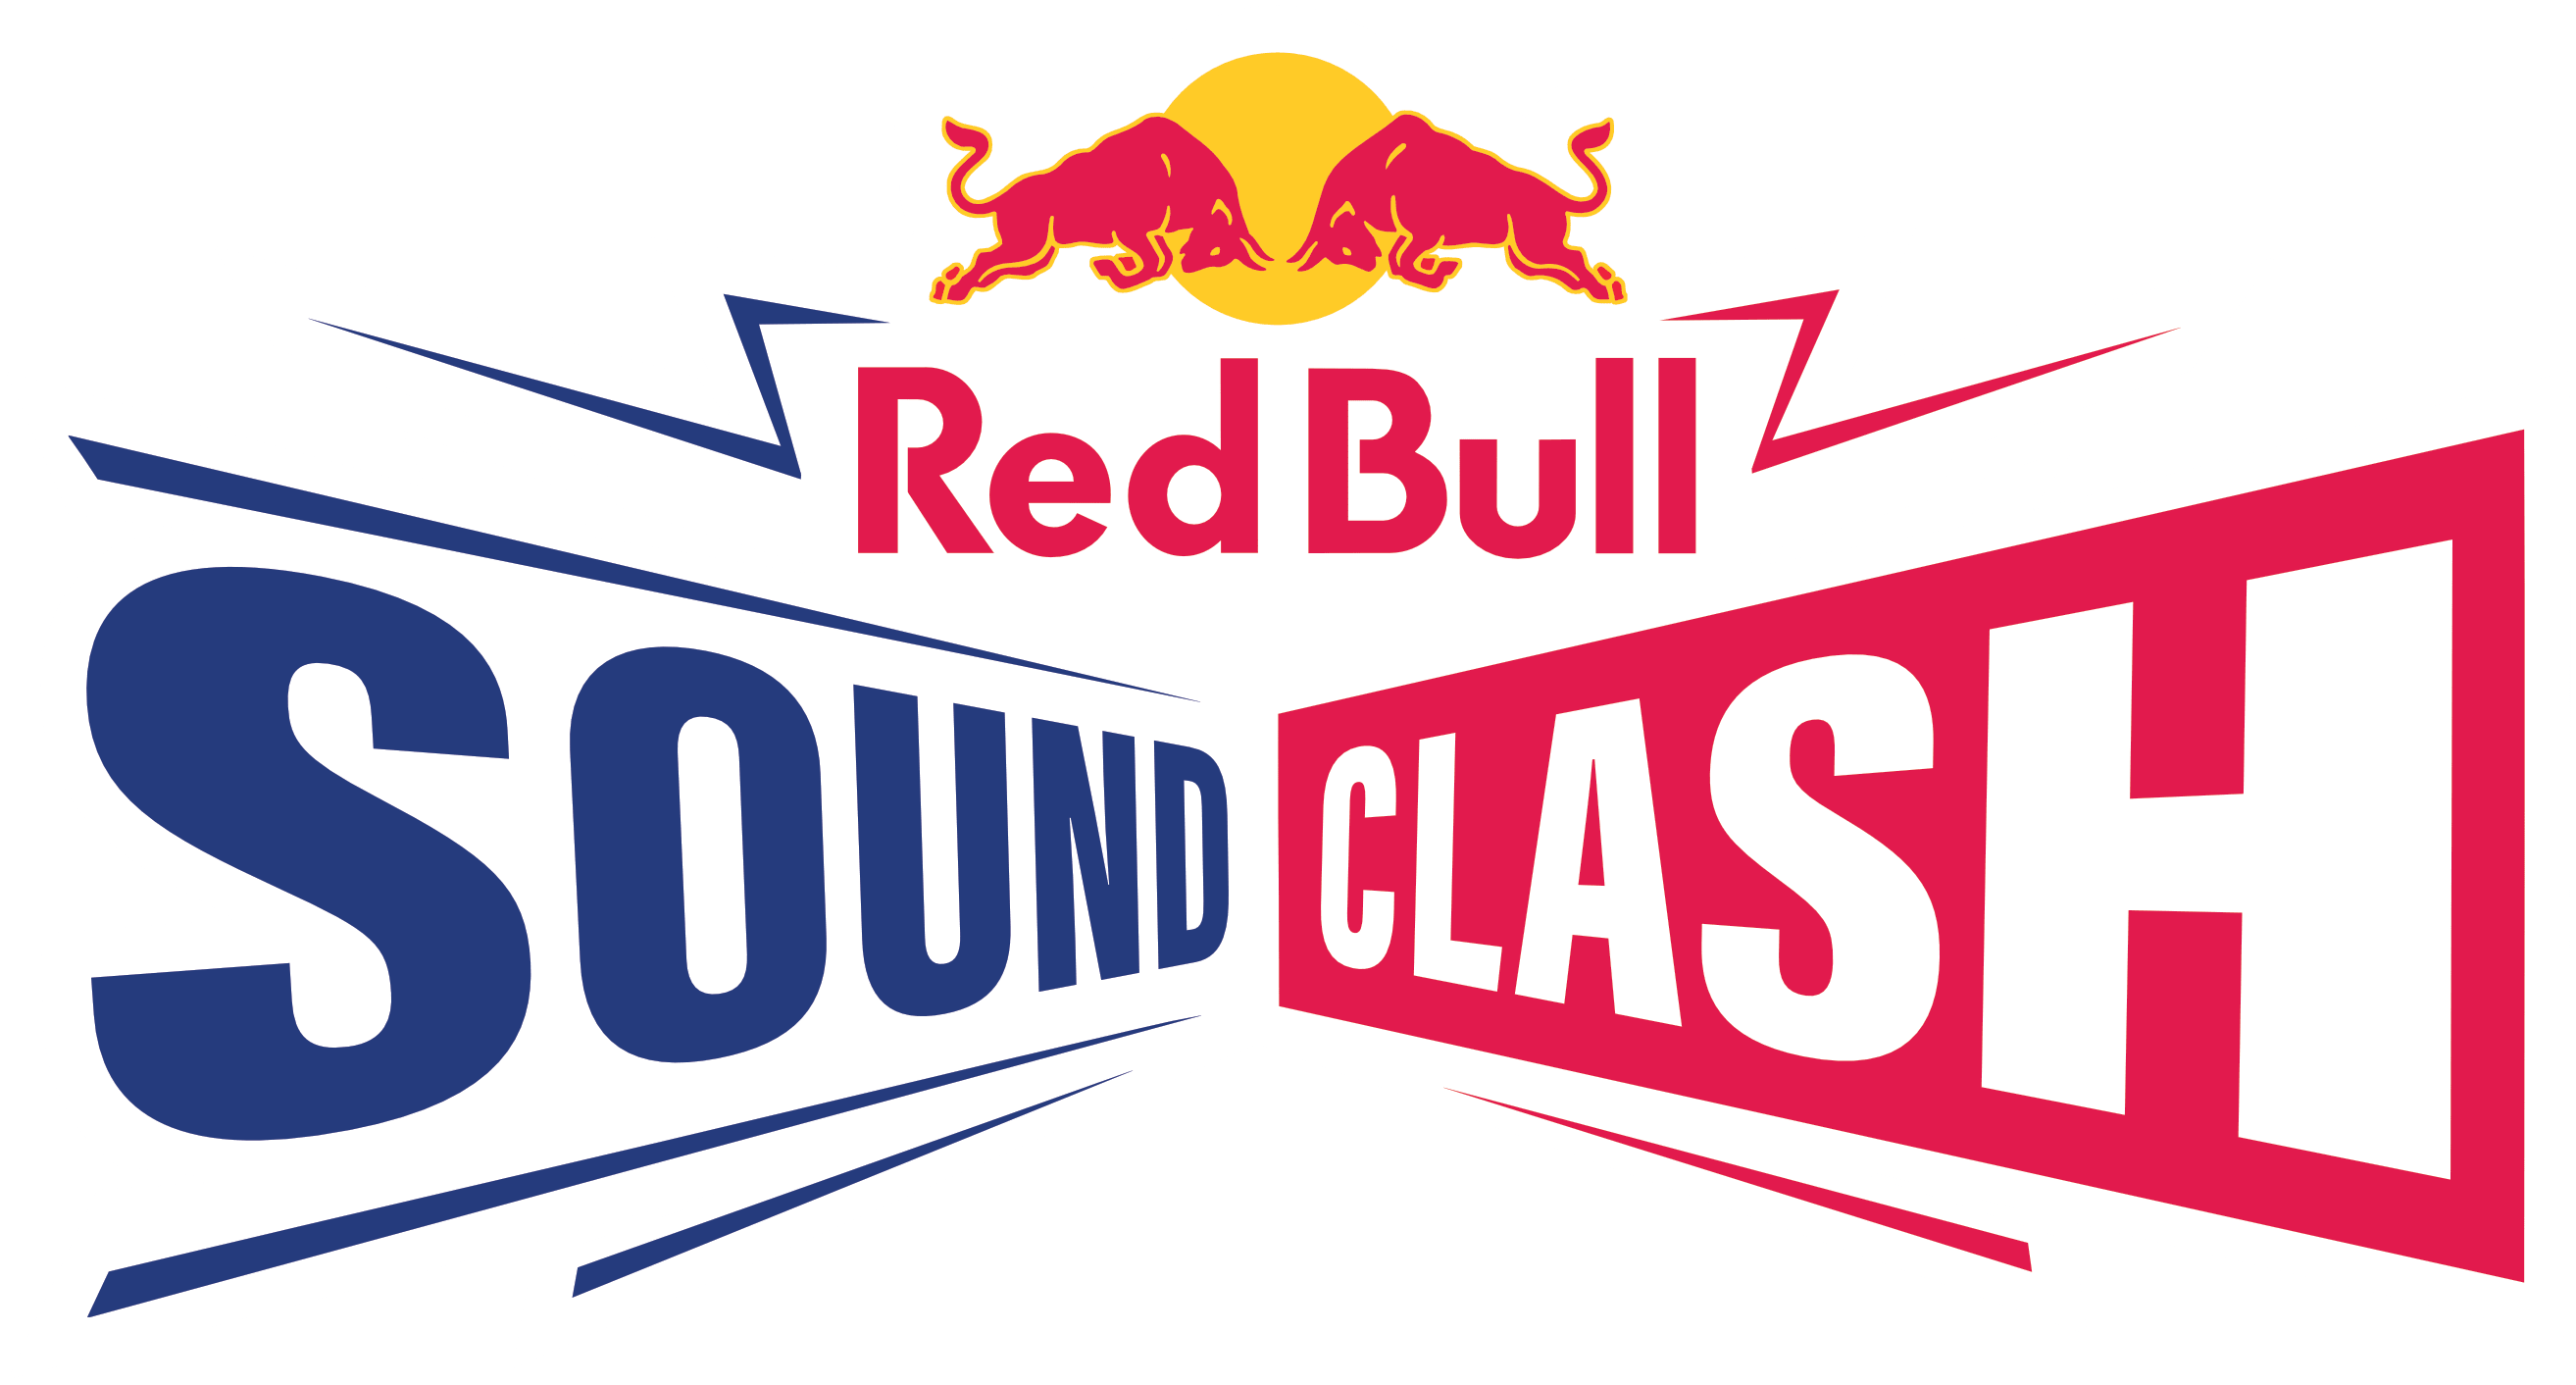 SoundClash Logo